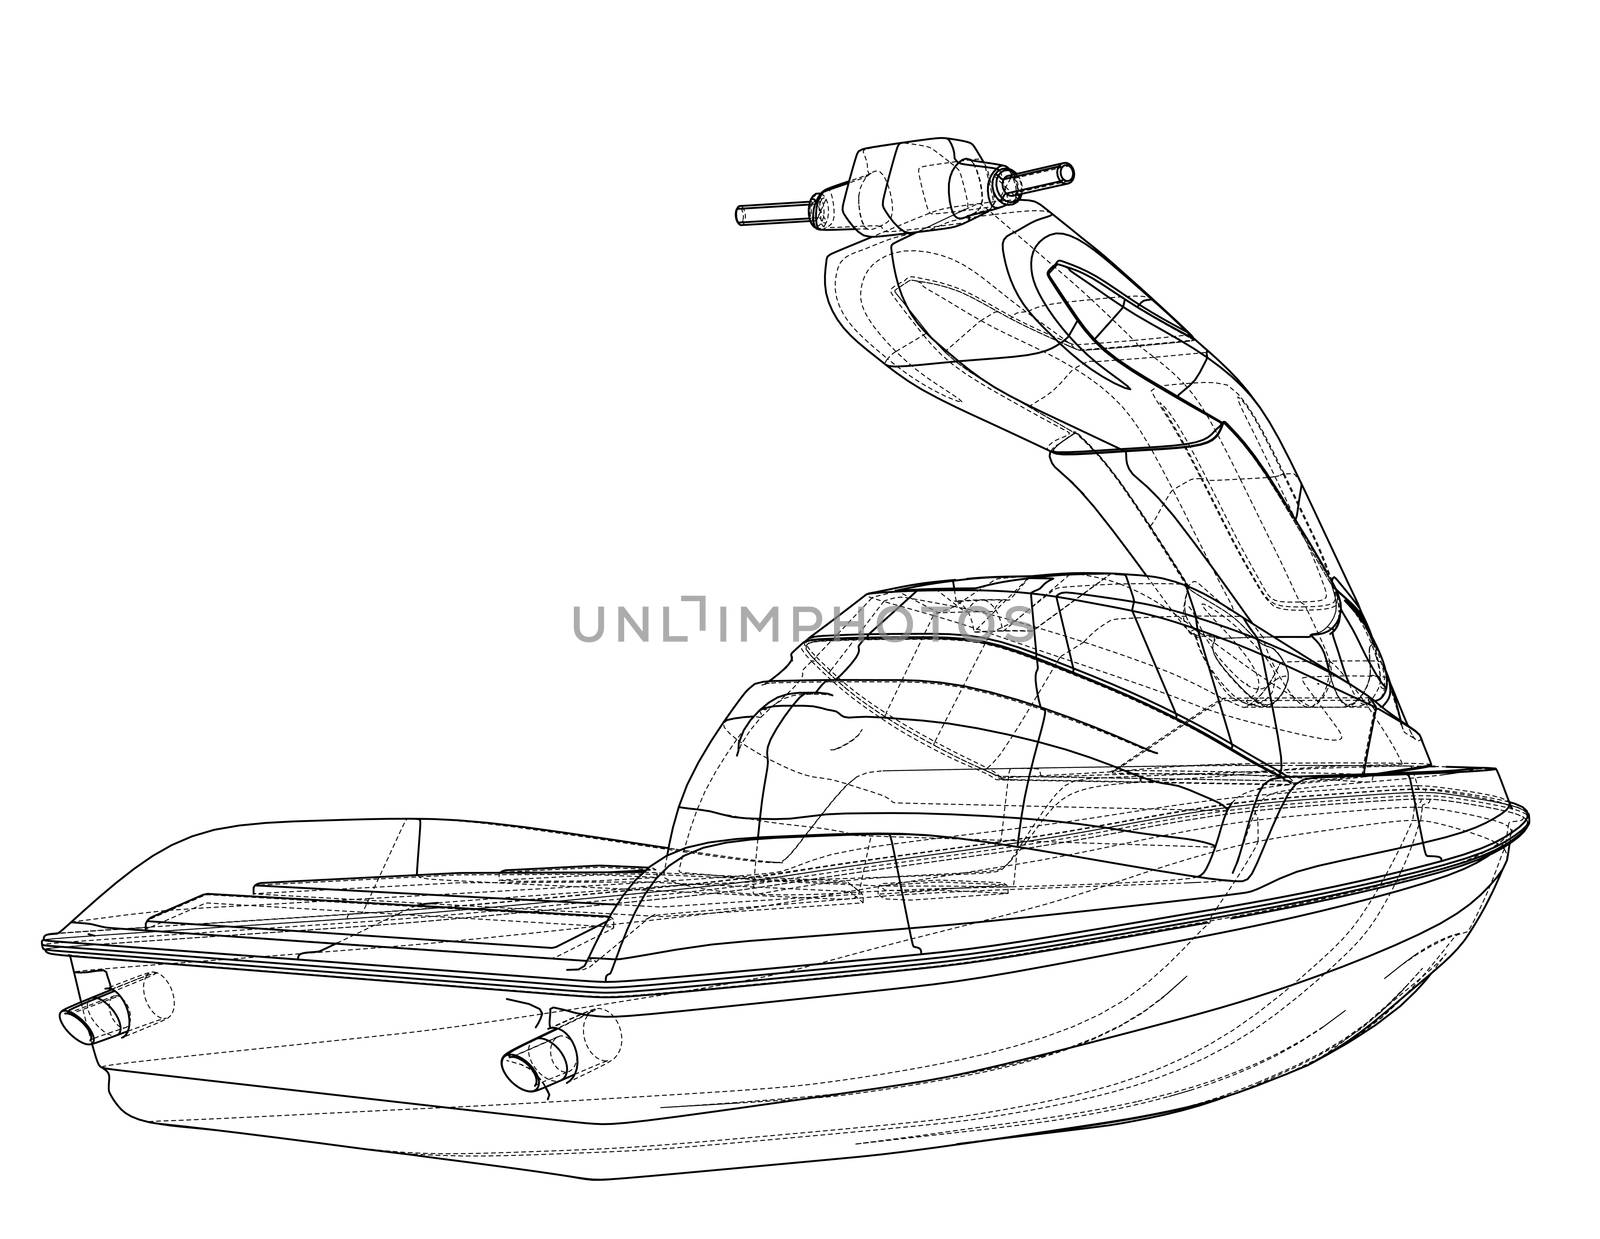 Jet ski sketch. 3d illustration. Wire-frame style